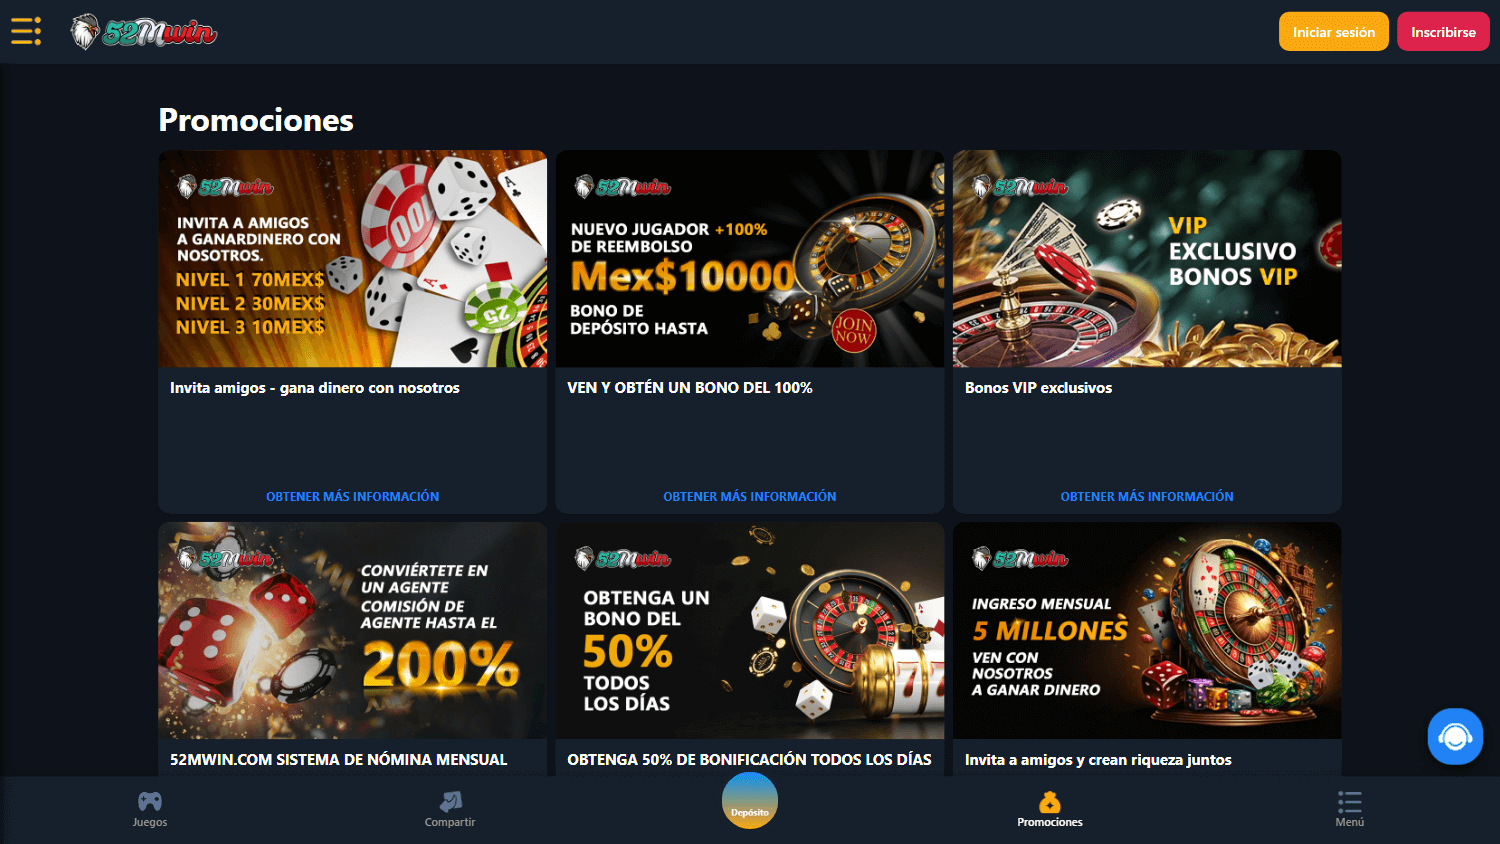 52mwin_casino_promotions_desktop